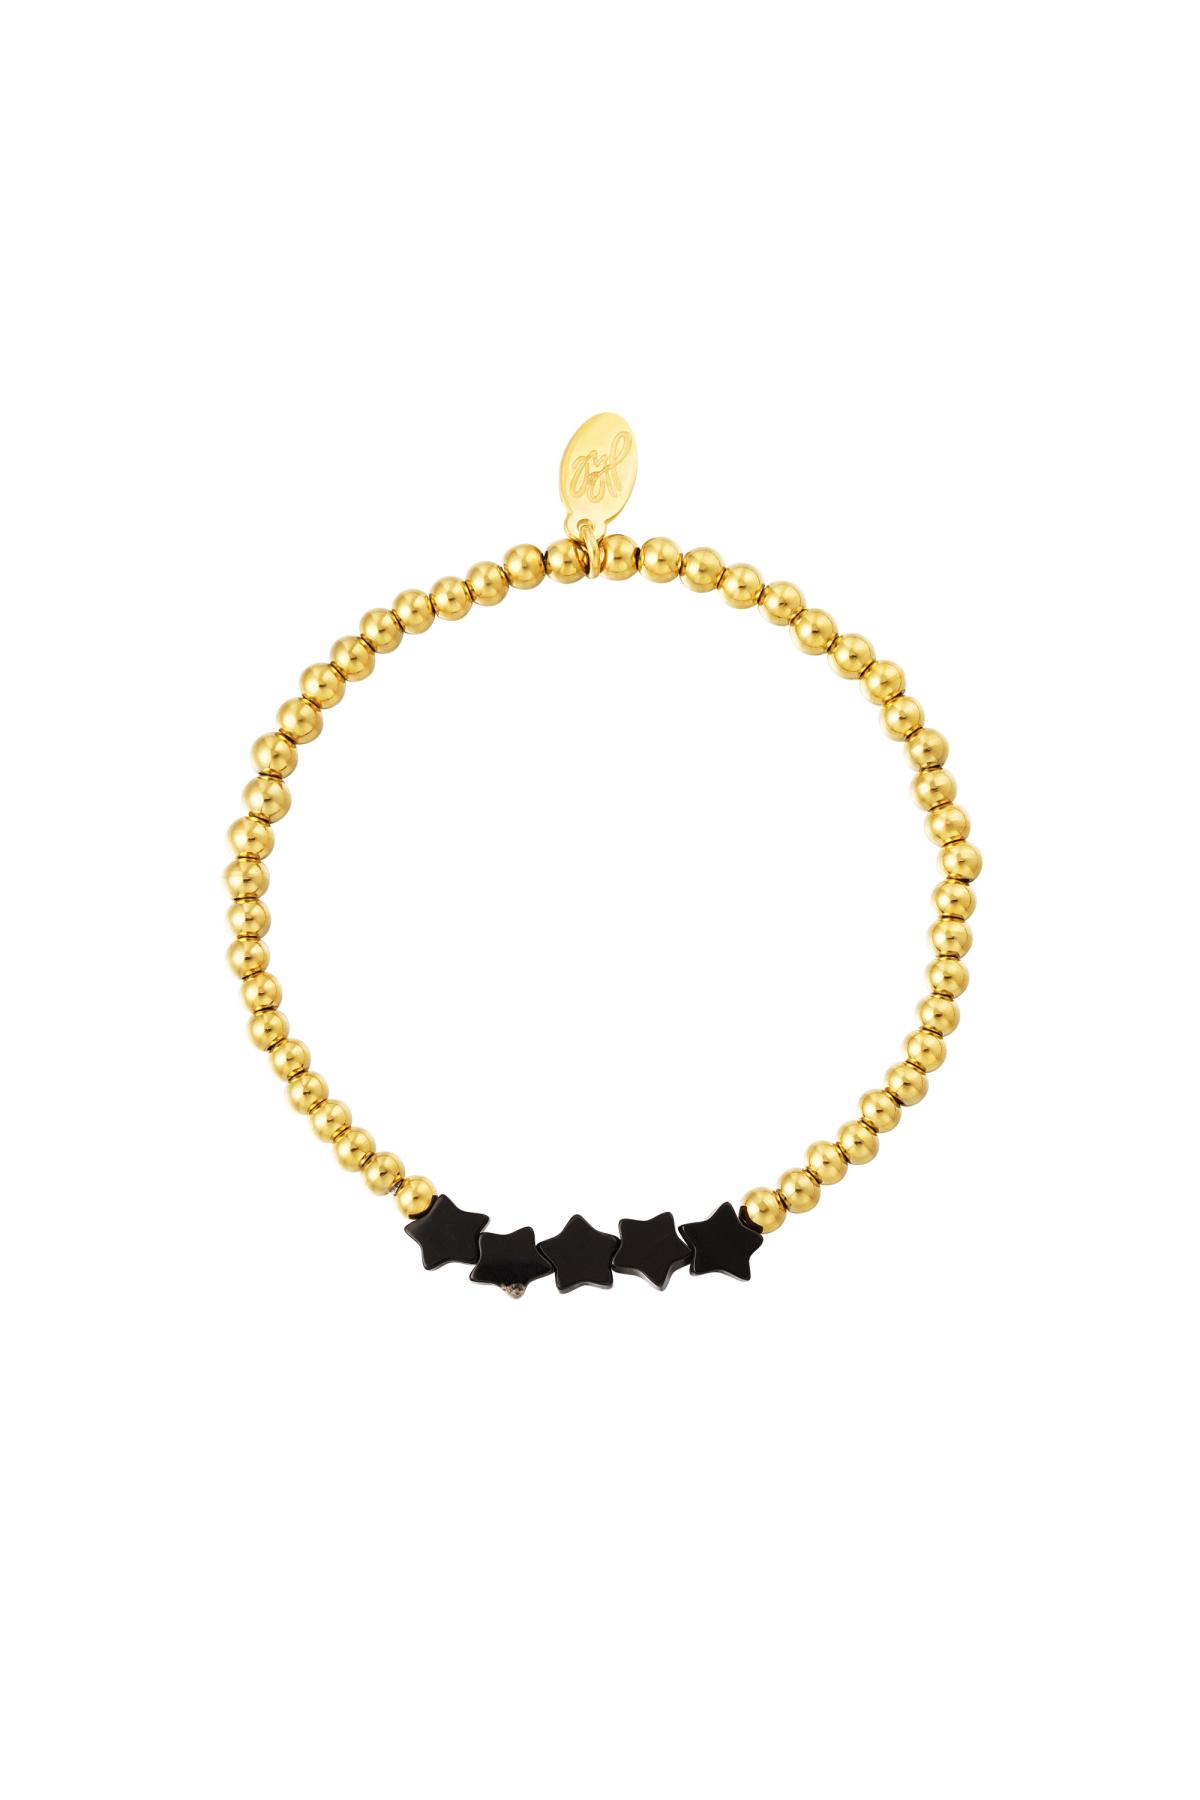 Beaded bracelet with star beads Black &amp; Gold Stainless Steel